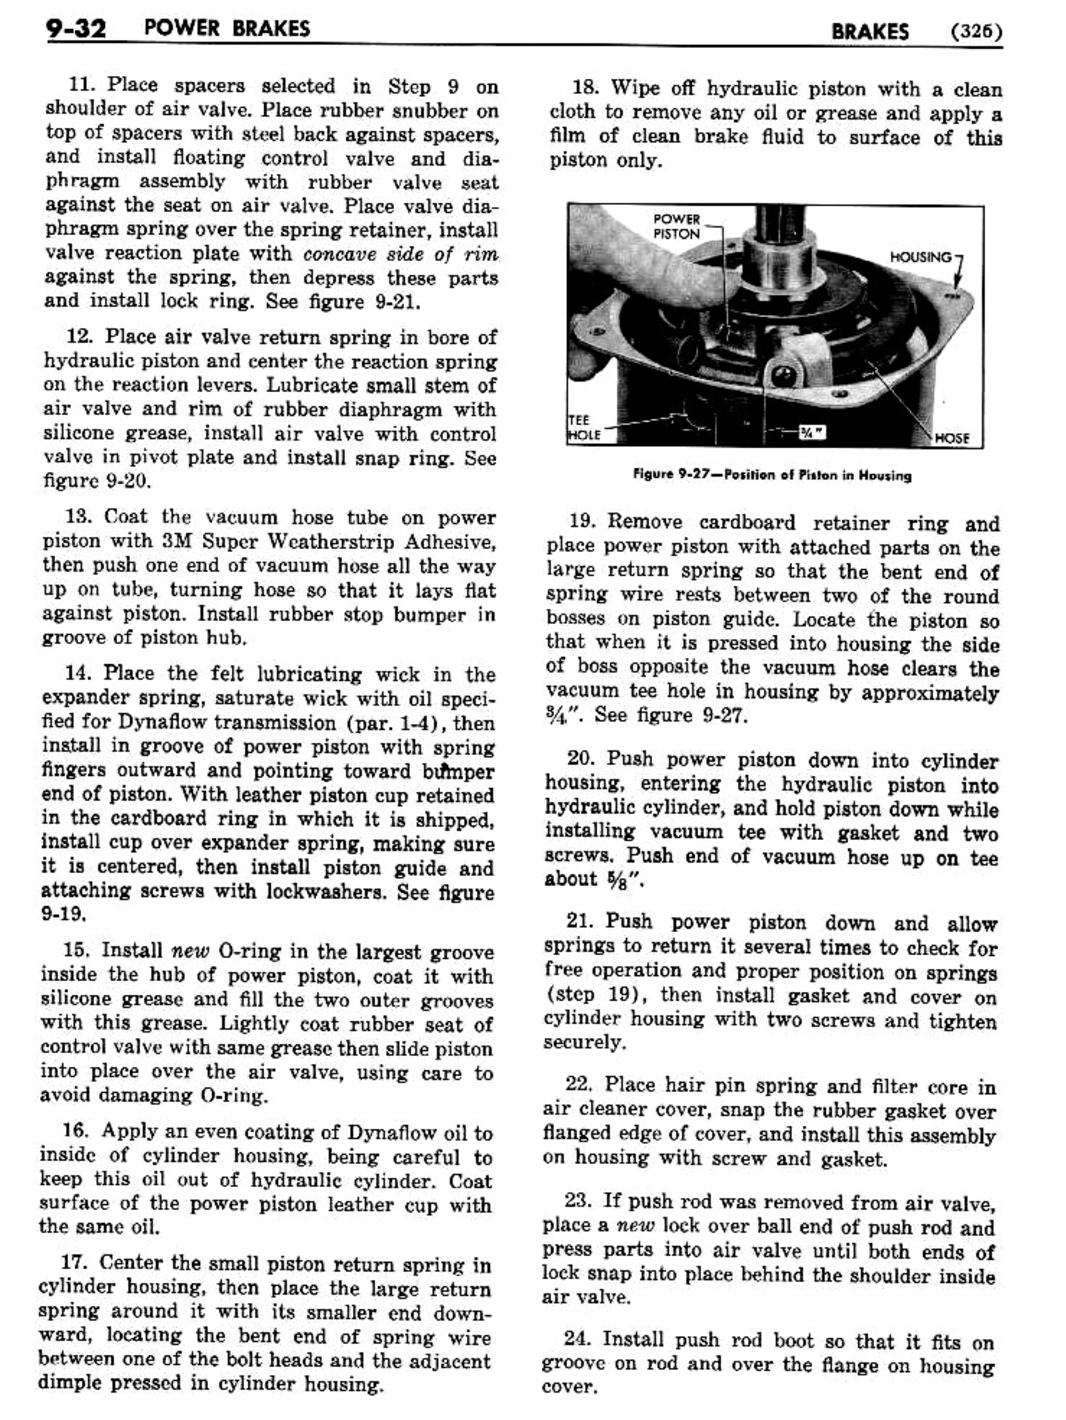 n_10 1956 Buick Shop Manual - Brakes-032-032.jpg